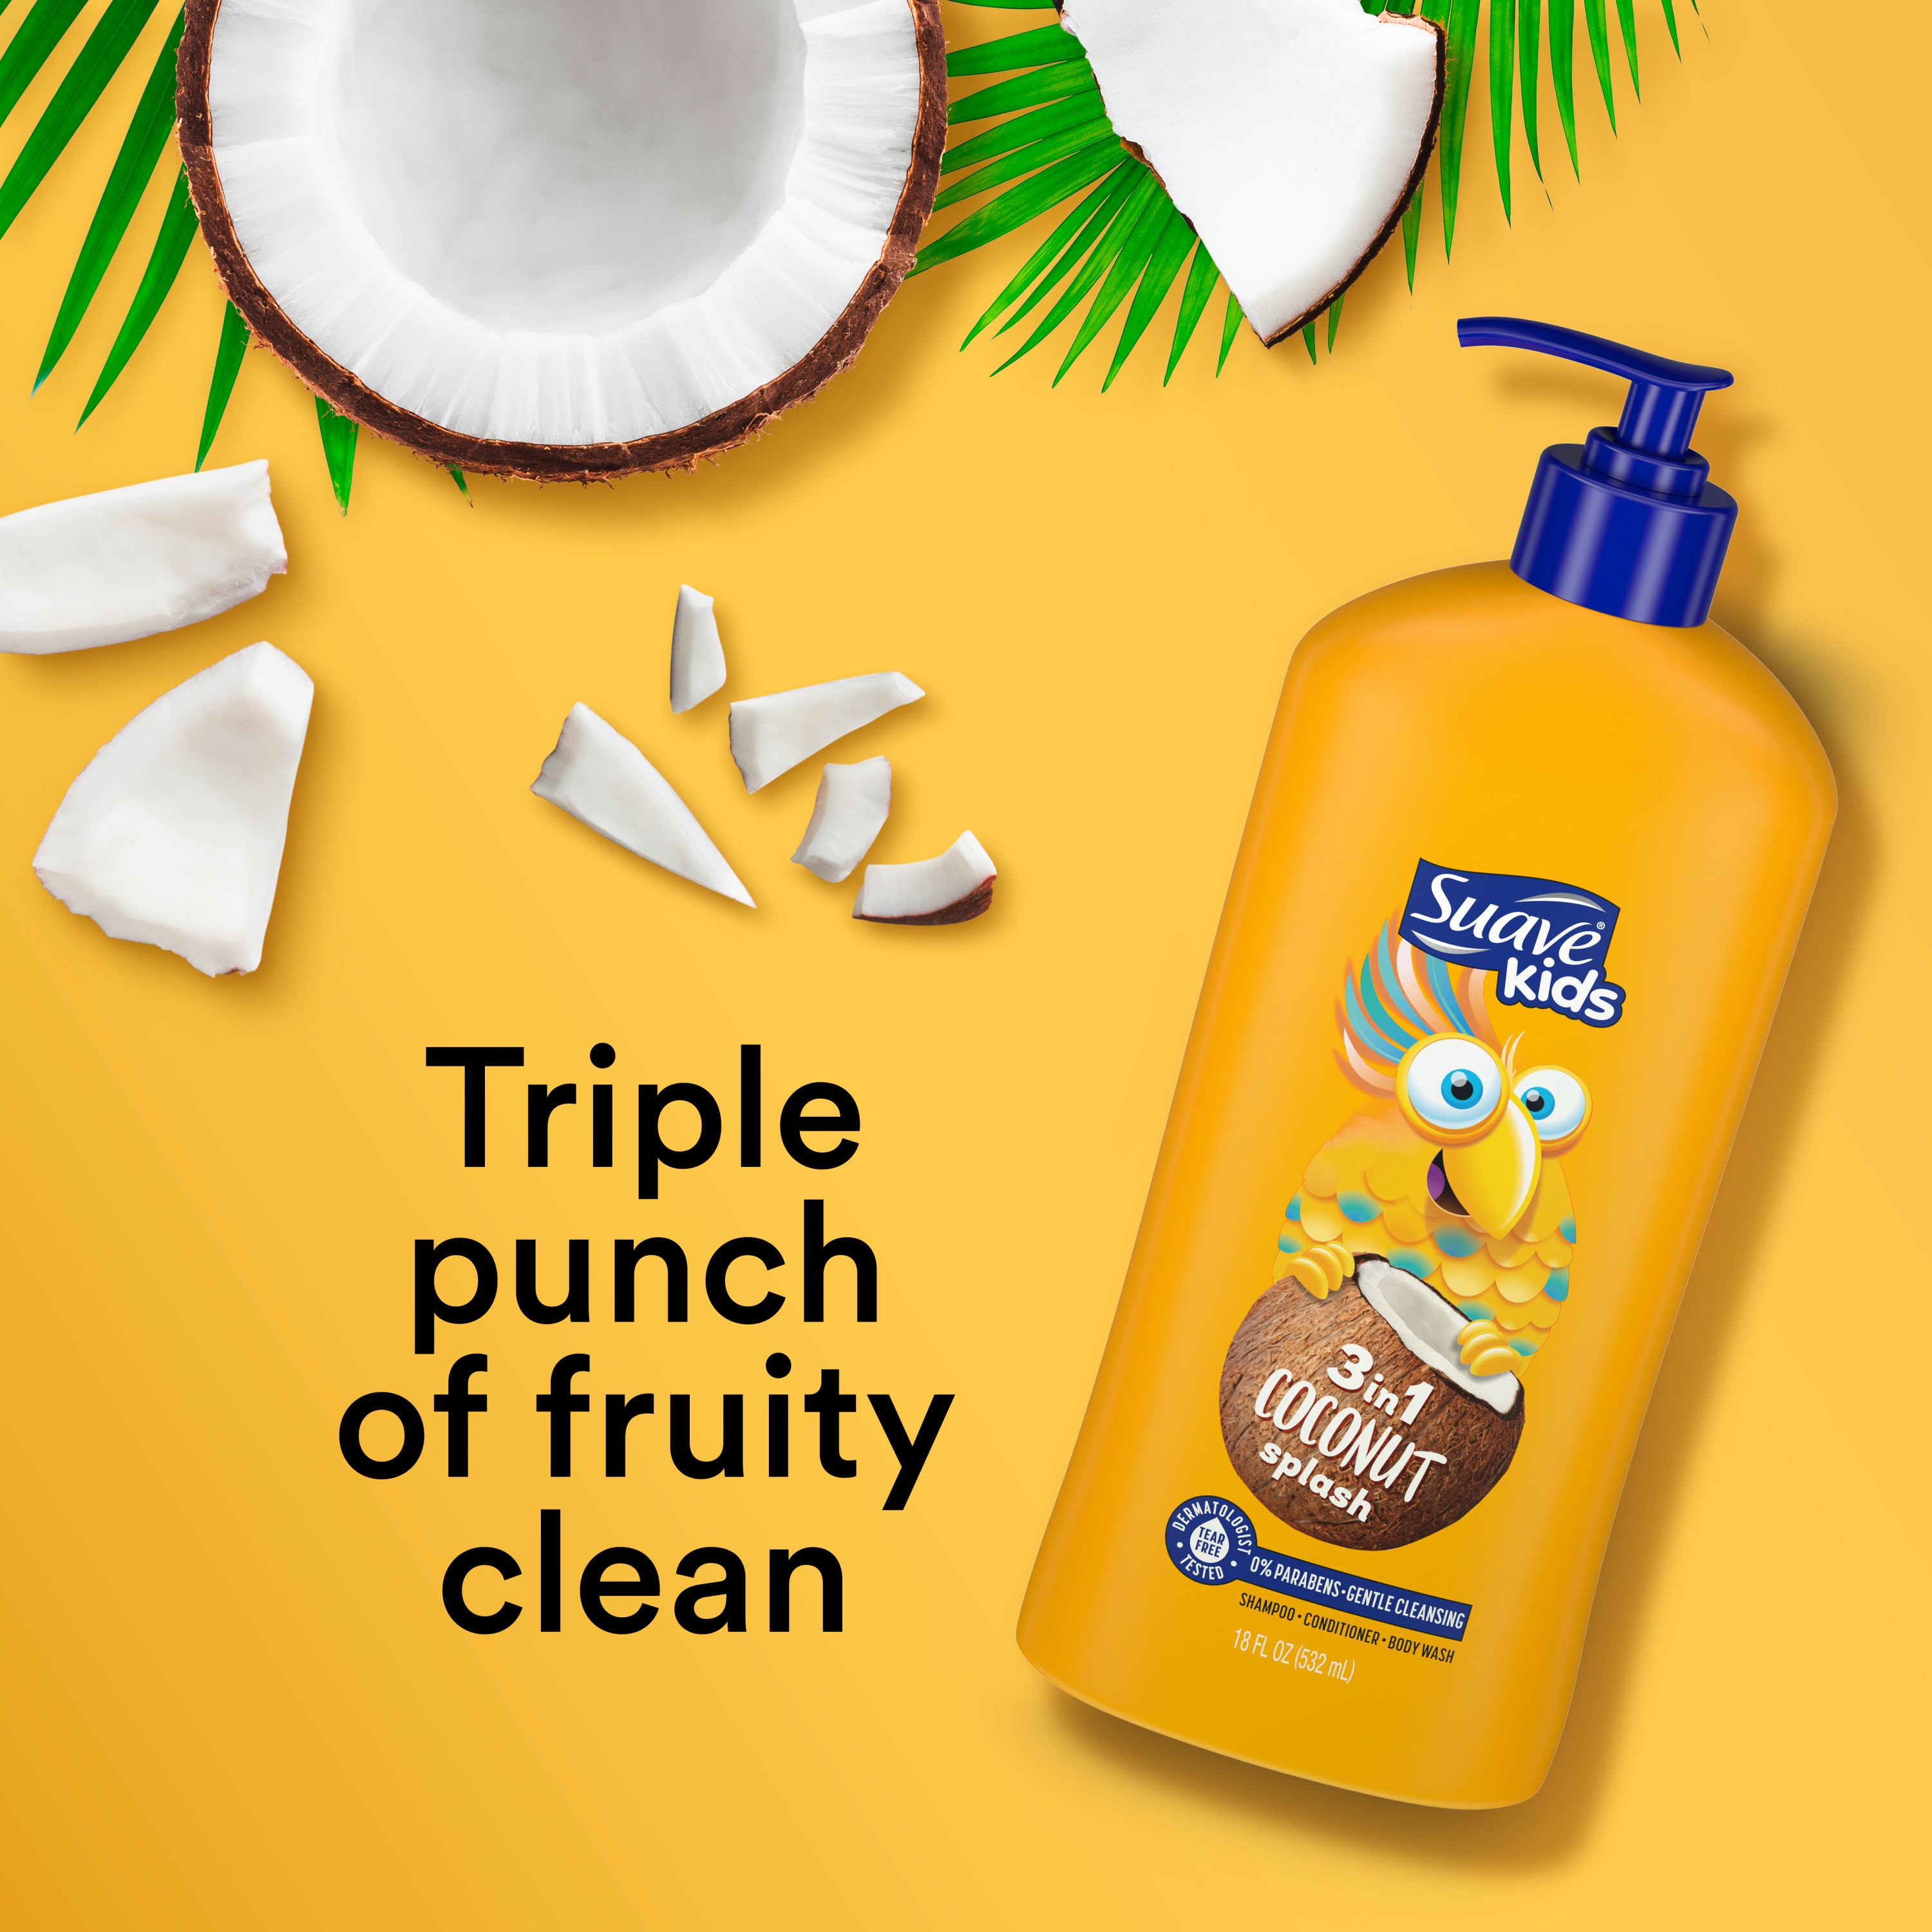 Suave Kids' Natural Coconut Oil 3-in-1 Pump Shampoo + Conditioner